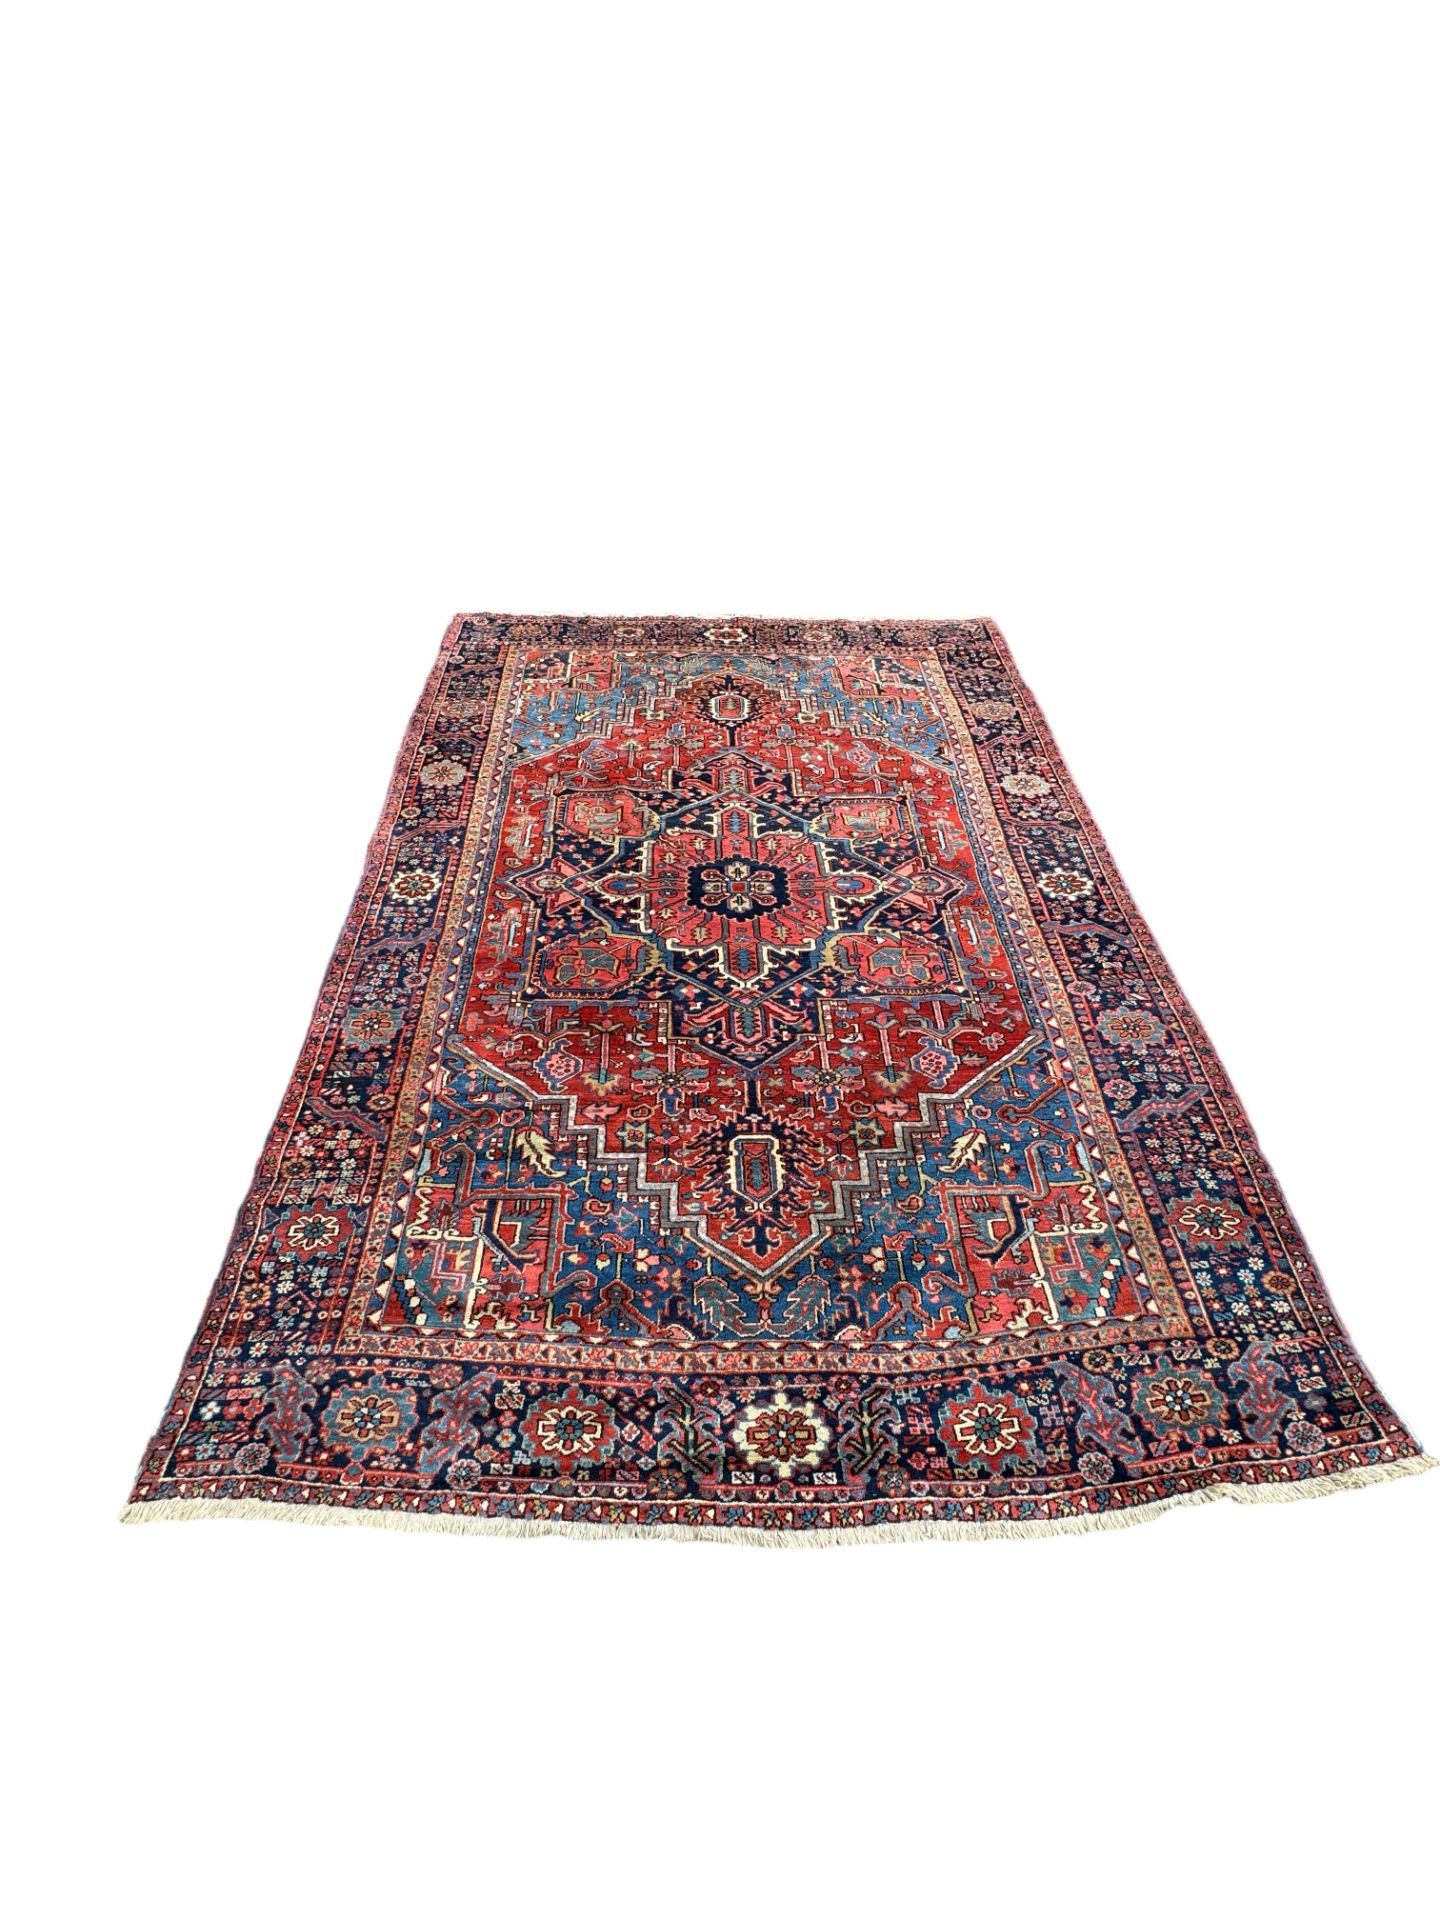 A Heriz carpet, North West Persia, circa 1920 - Image 8 of 8